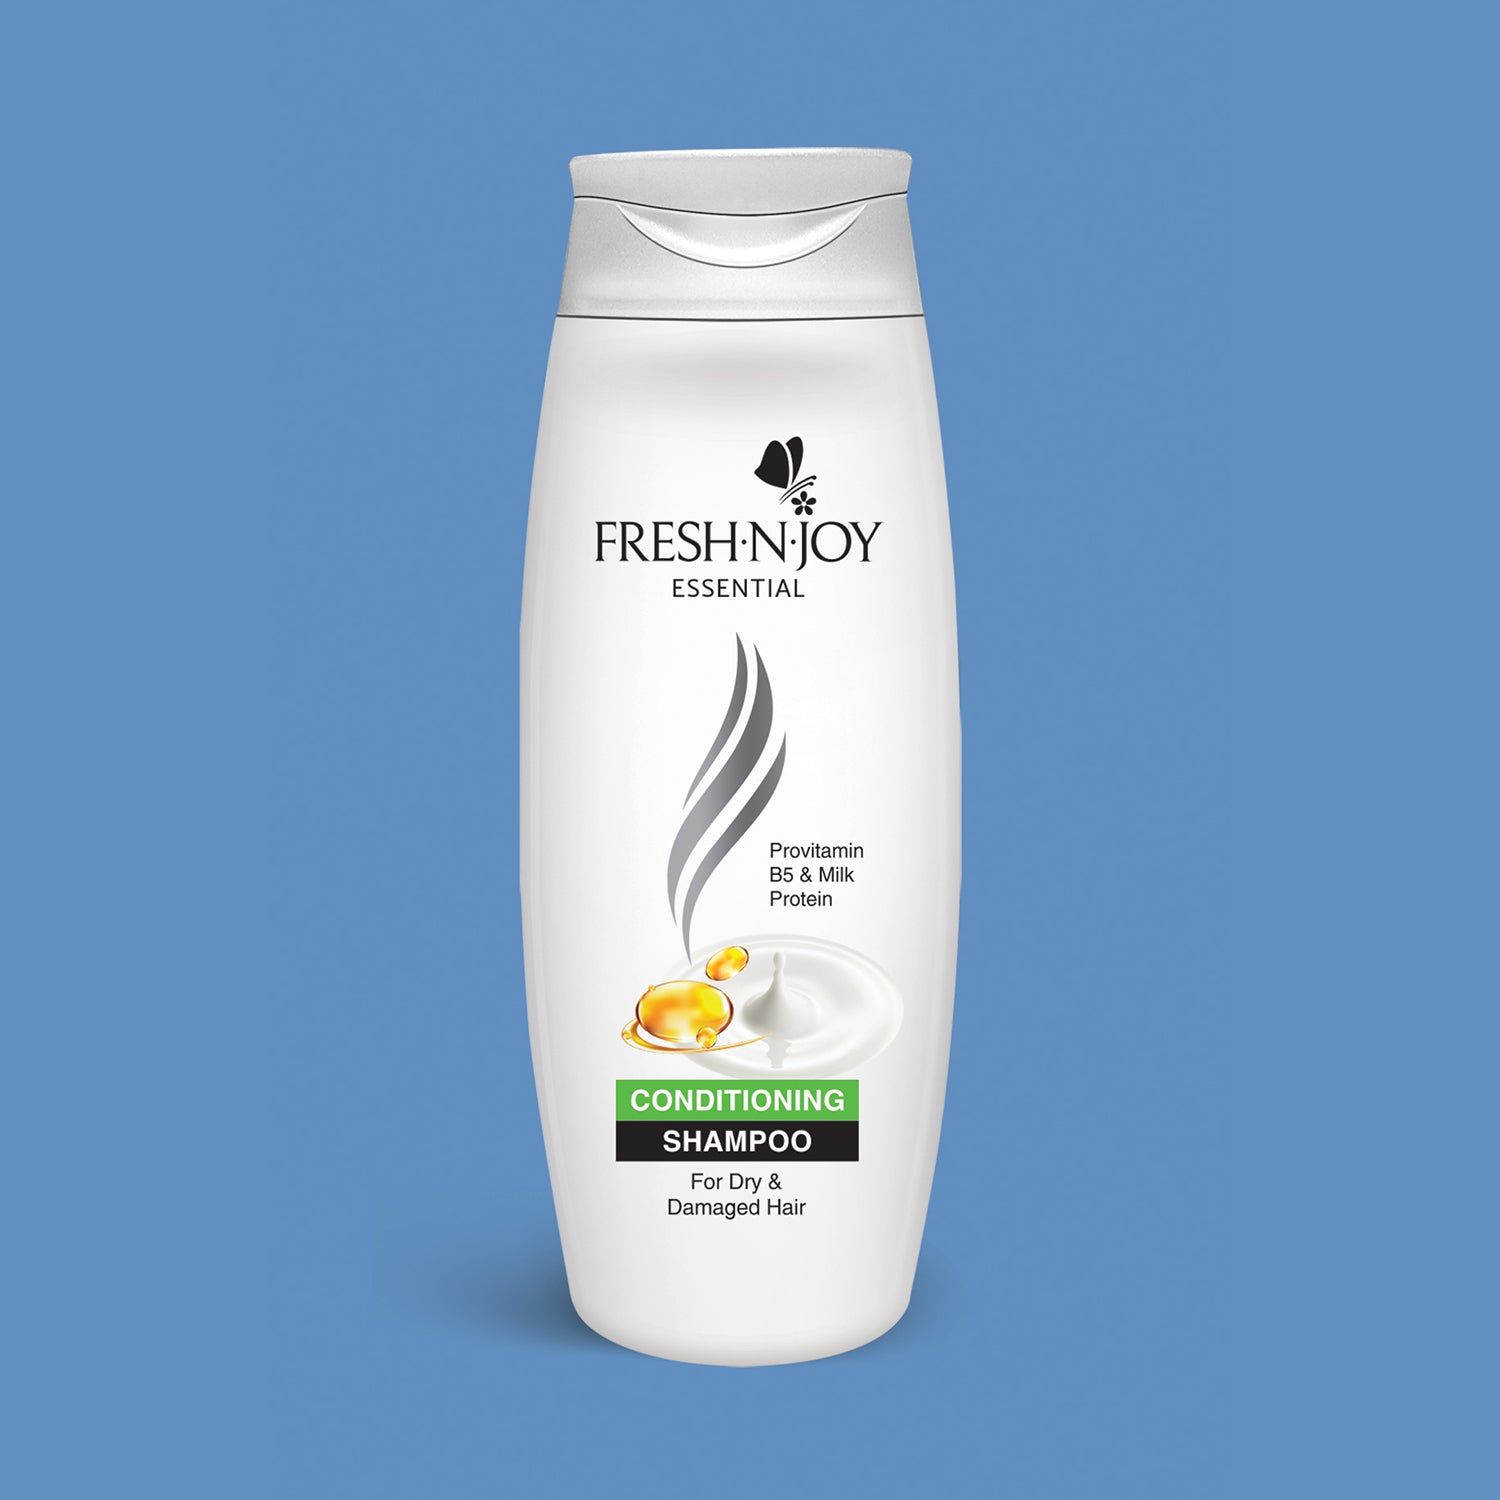 Shampoo - Conditioning with Provitamin B5 & Milk Protein